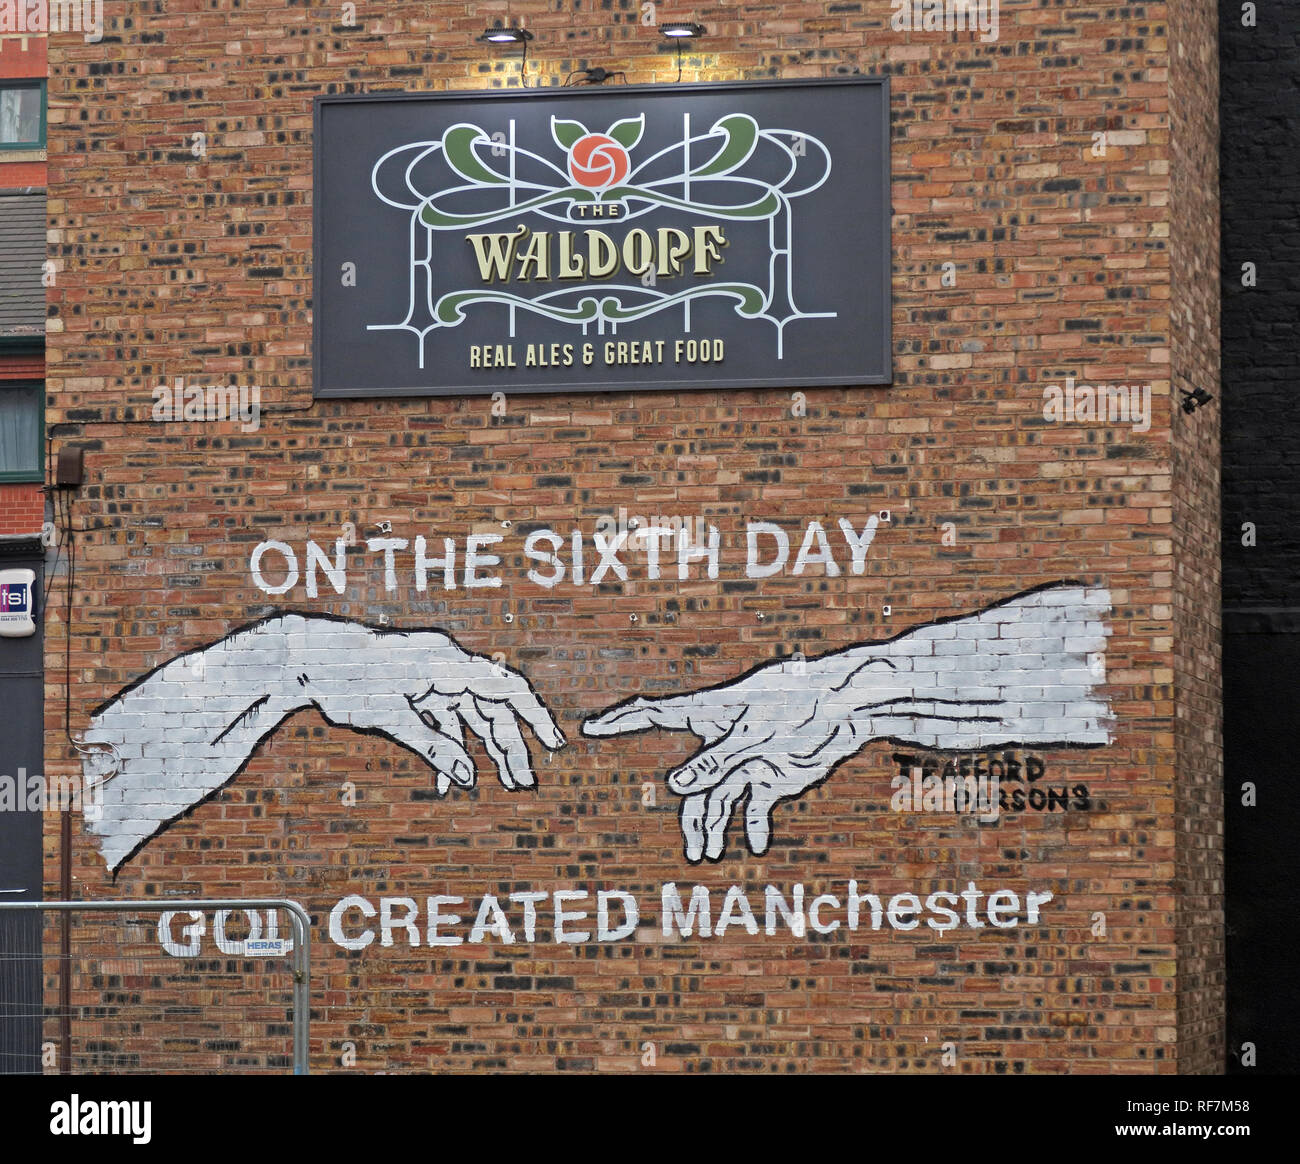 Am 6. Tag schuf Gott Manchester, Gable End, The Waldorf Pub Bar, Gore St, Piccadilly, Northern Quarter, Manchester, Großbritannien, M1 3AQ Stockfoto